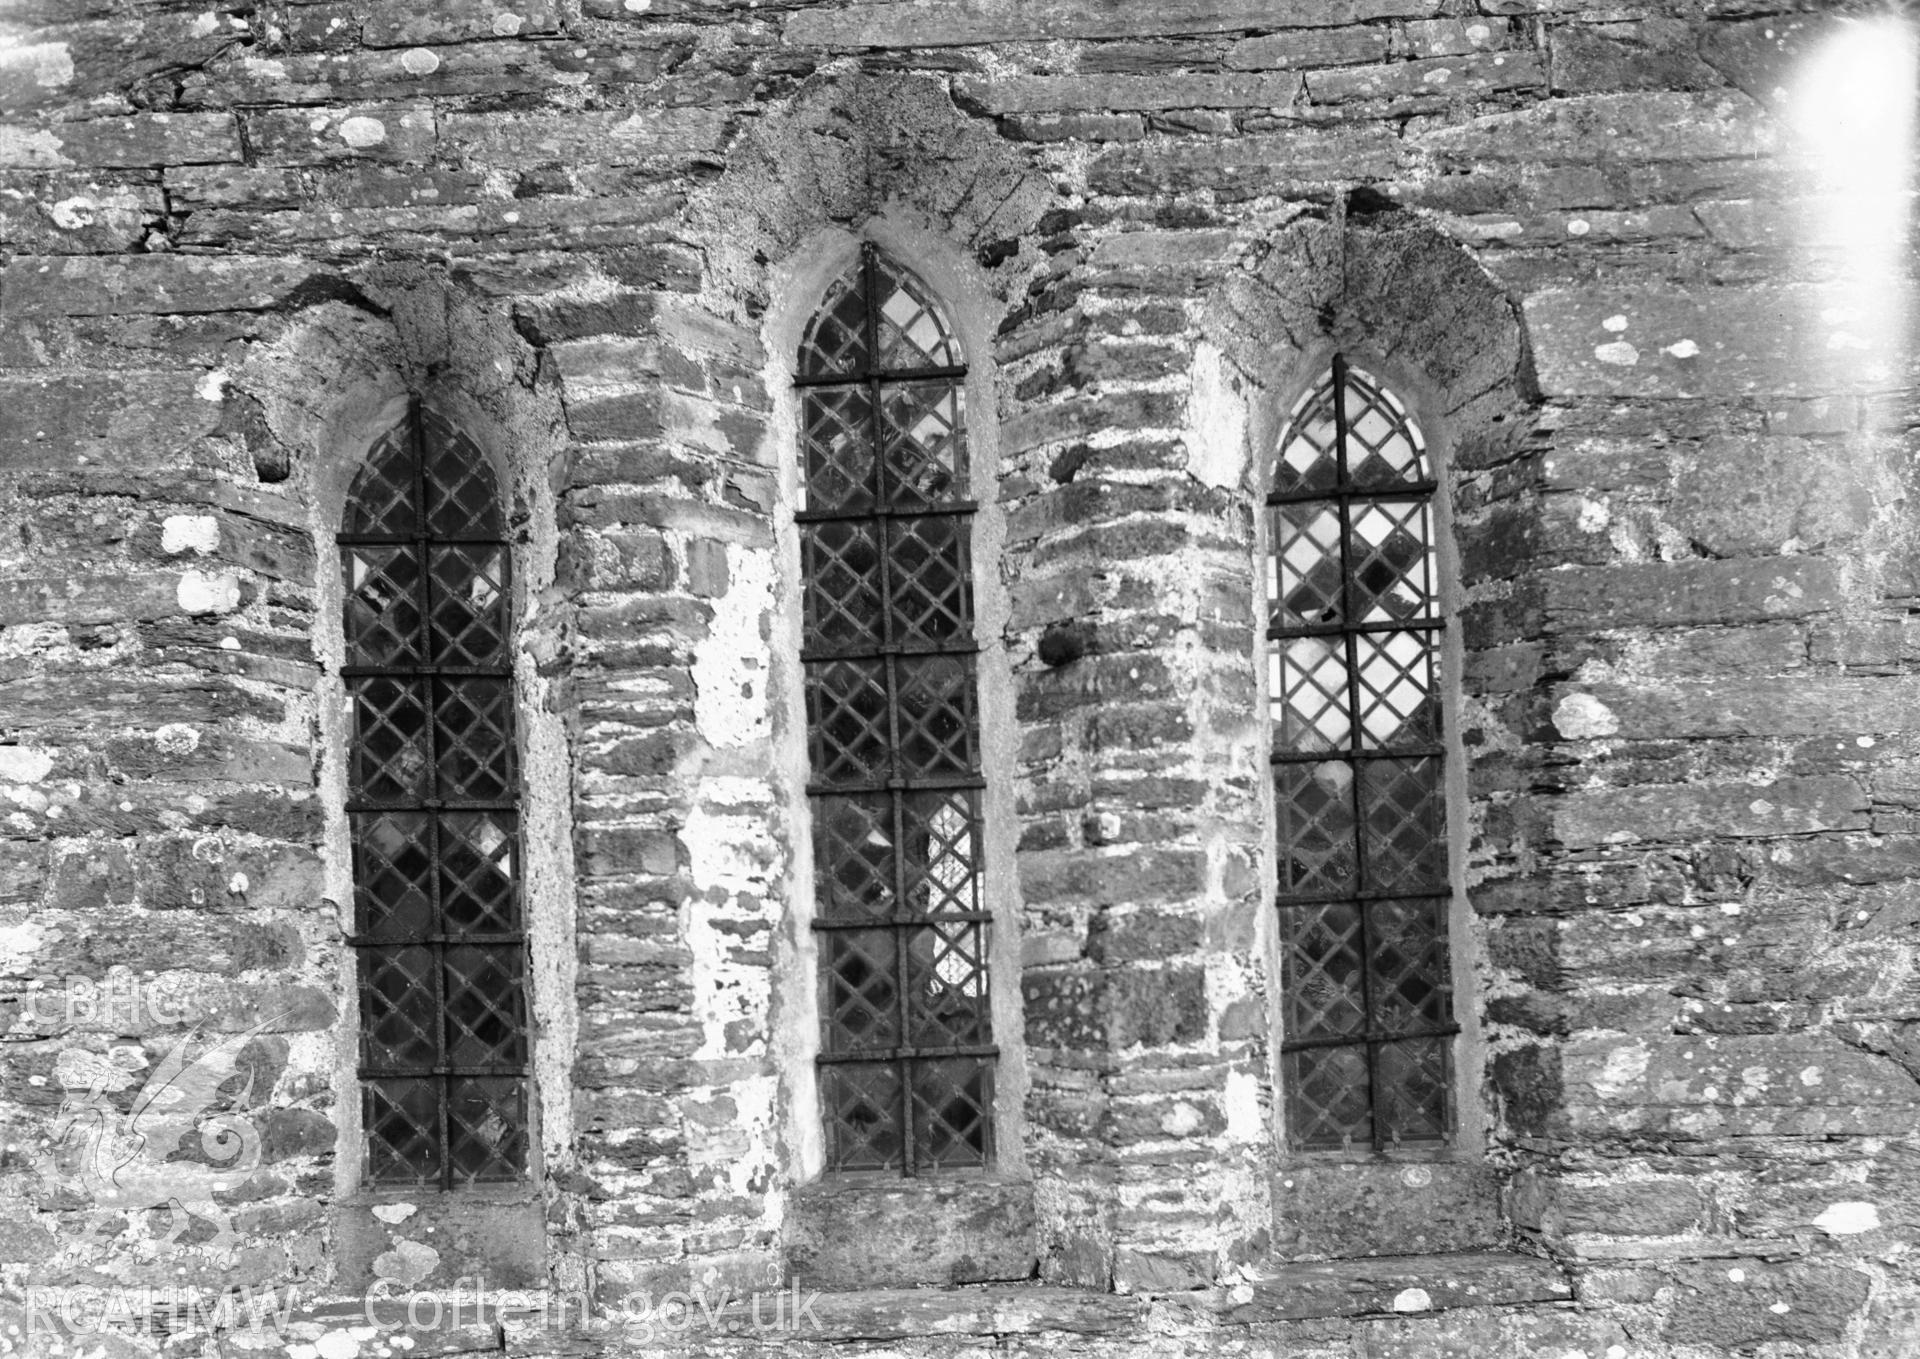 Exterior view of window at St Brothen's Church, Llanfrothen taken 07.06.1941.